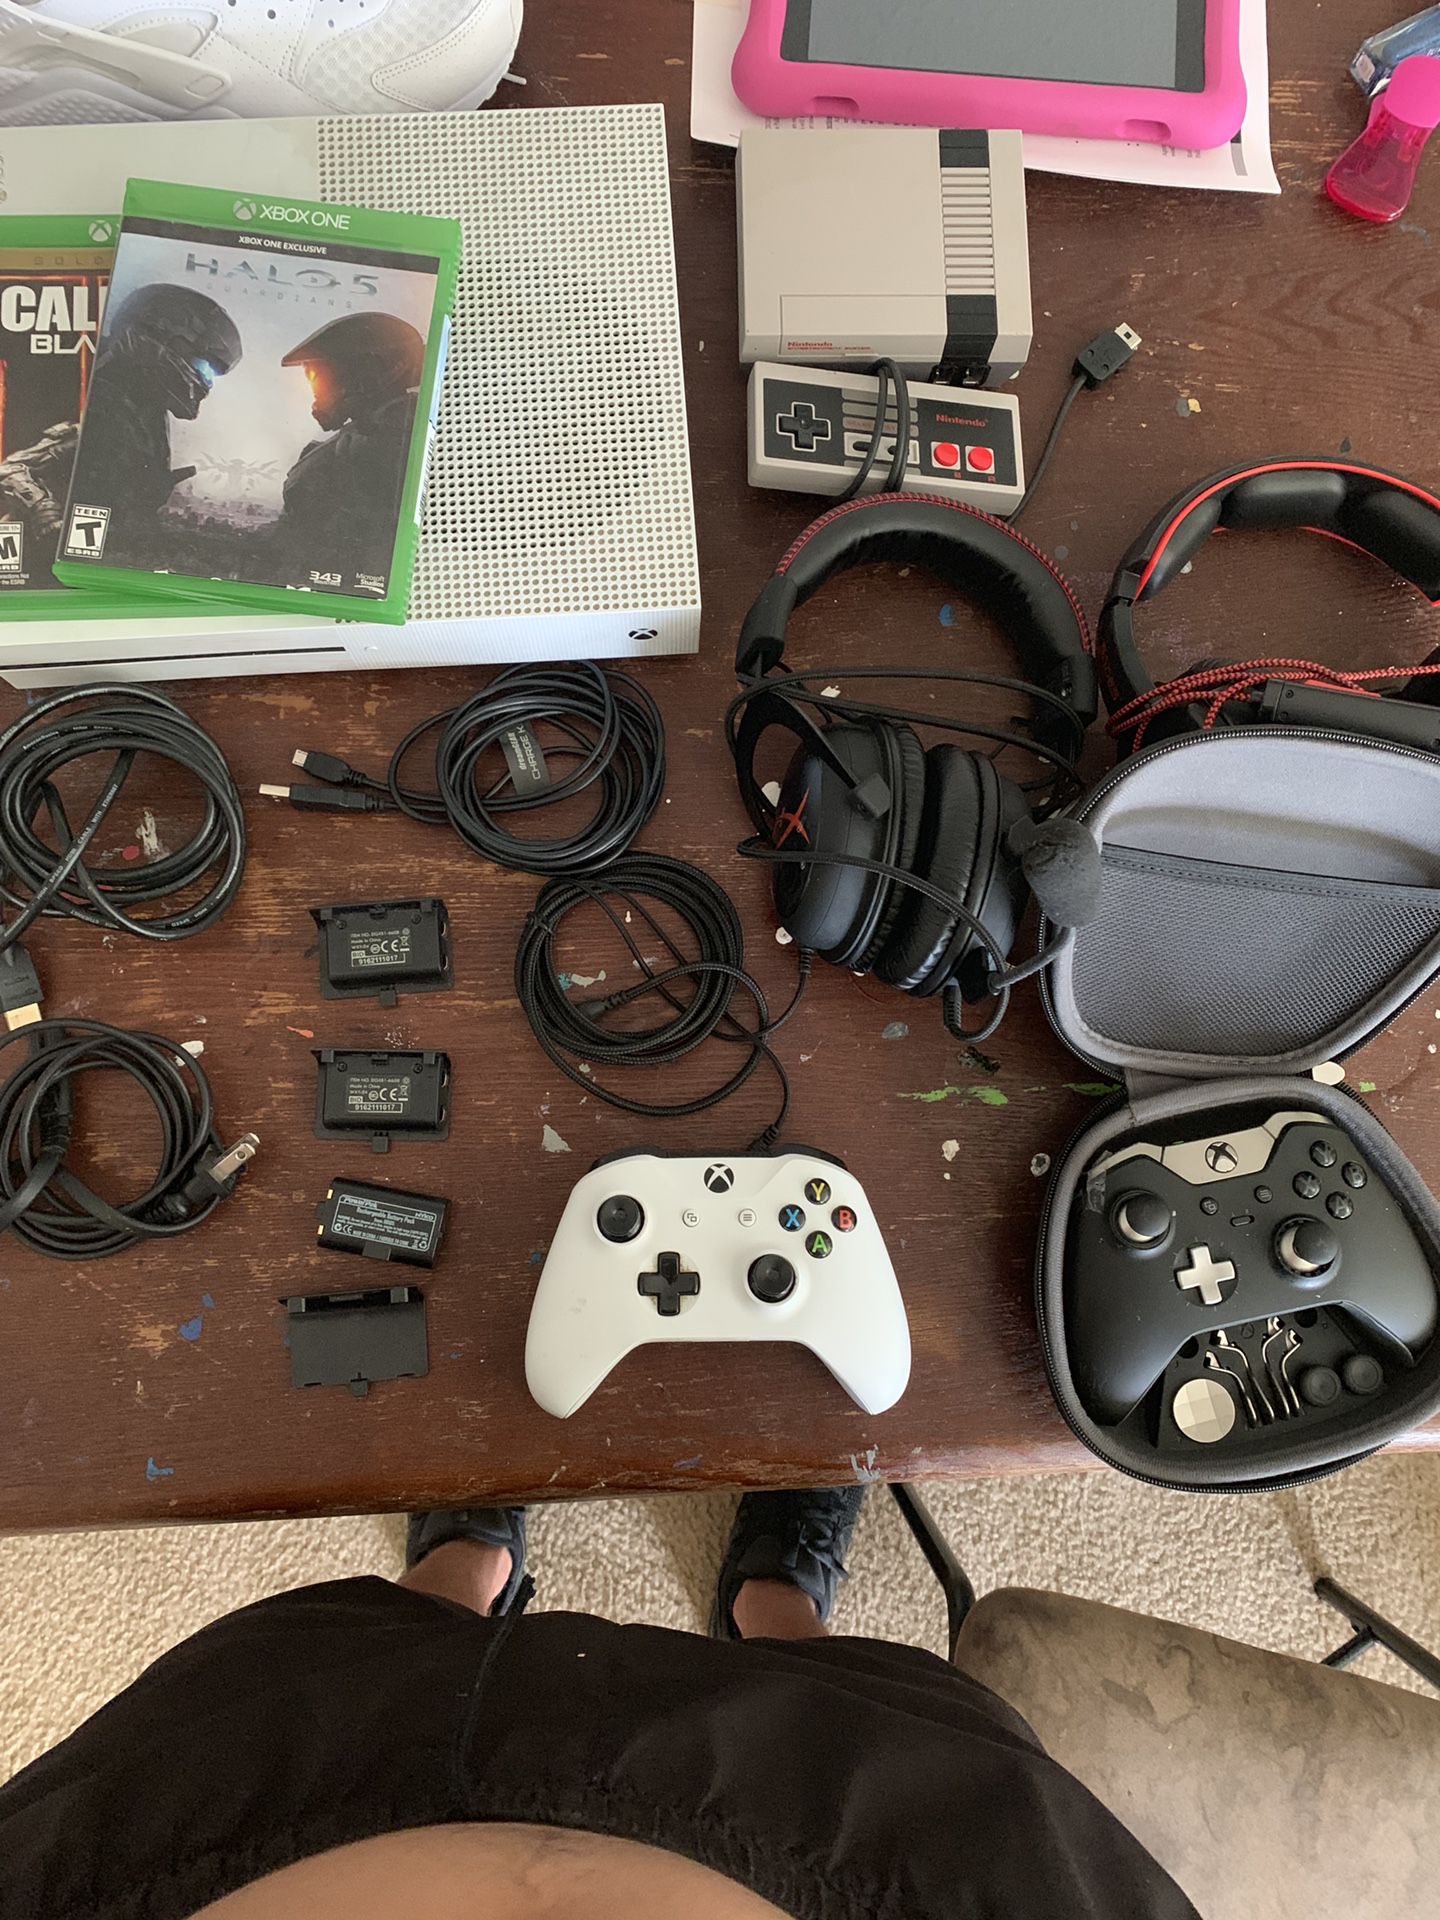 Xbox, Nintendo, and accessories